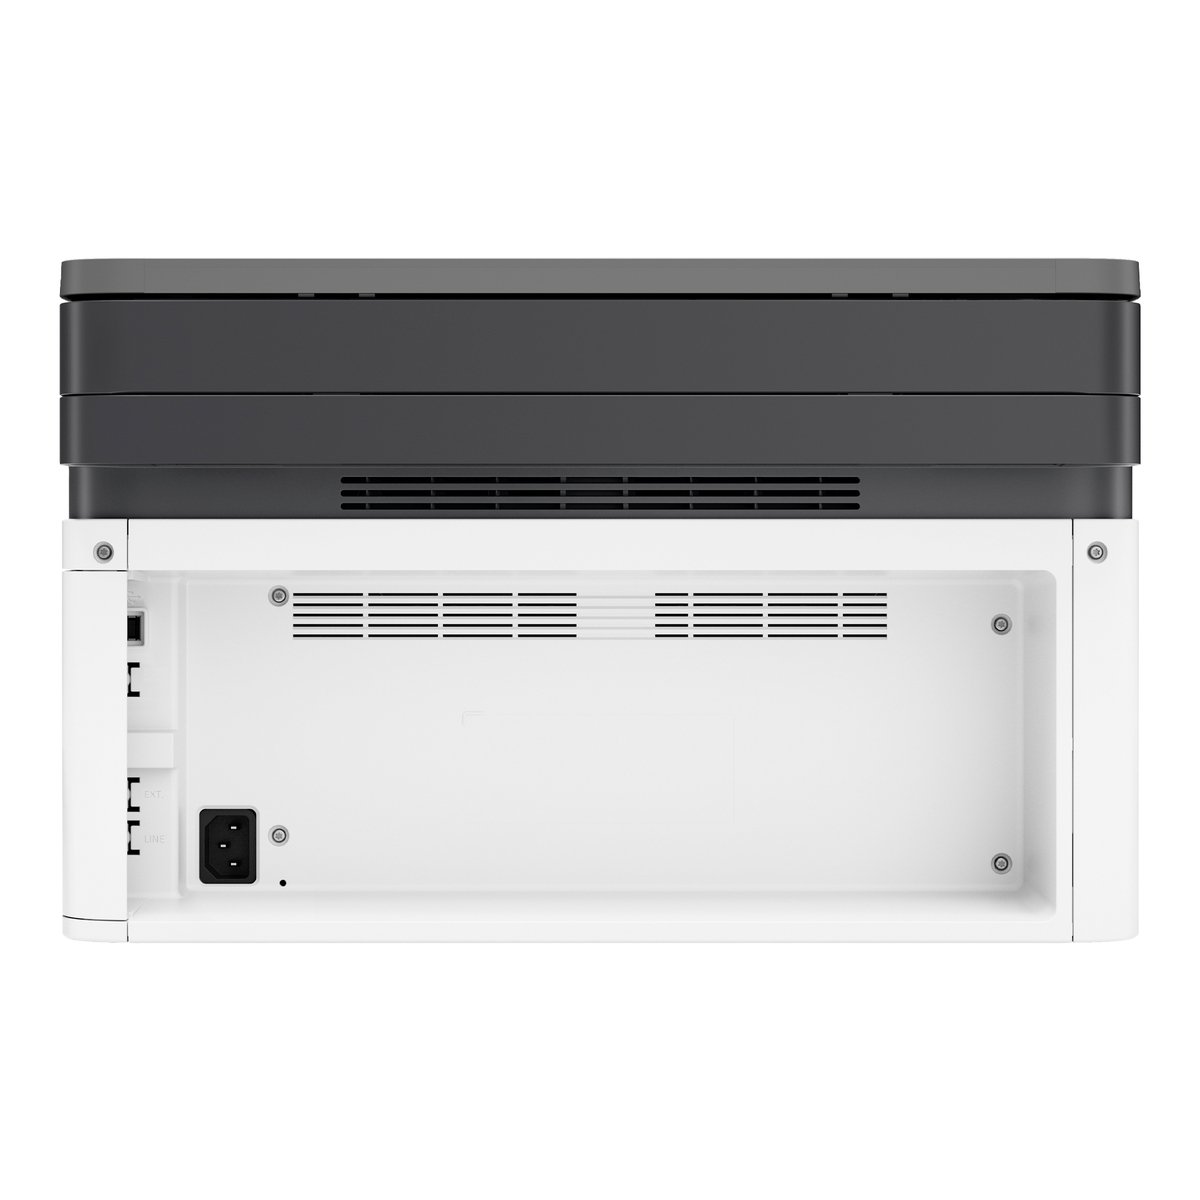 HP Laser MFP 135w Multi Function Wireless Printer